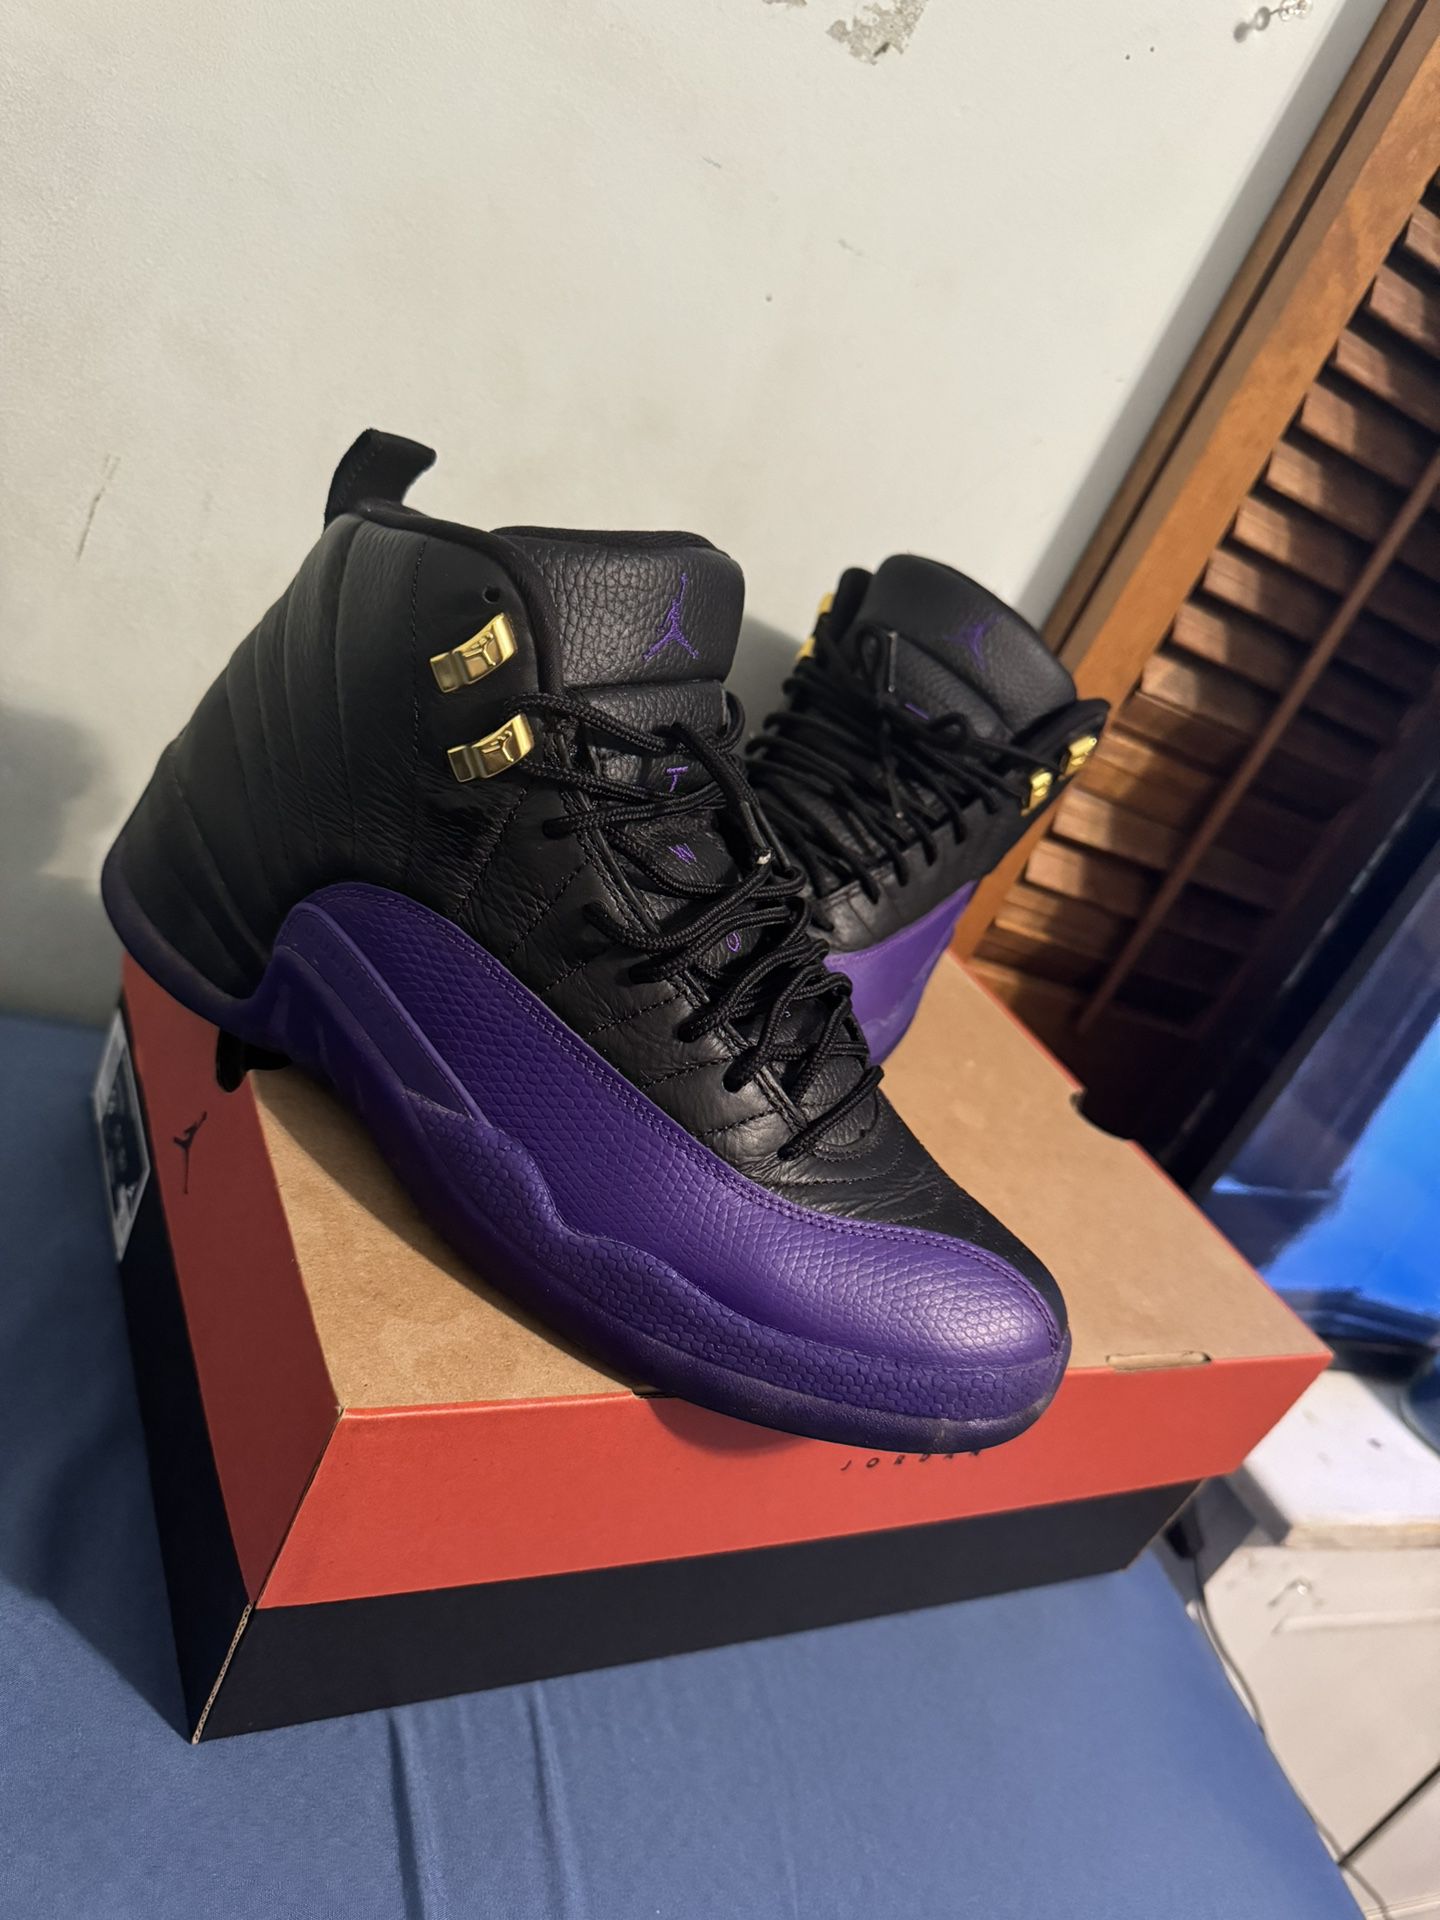 Jordan 12s “Retro Filed Purple “